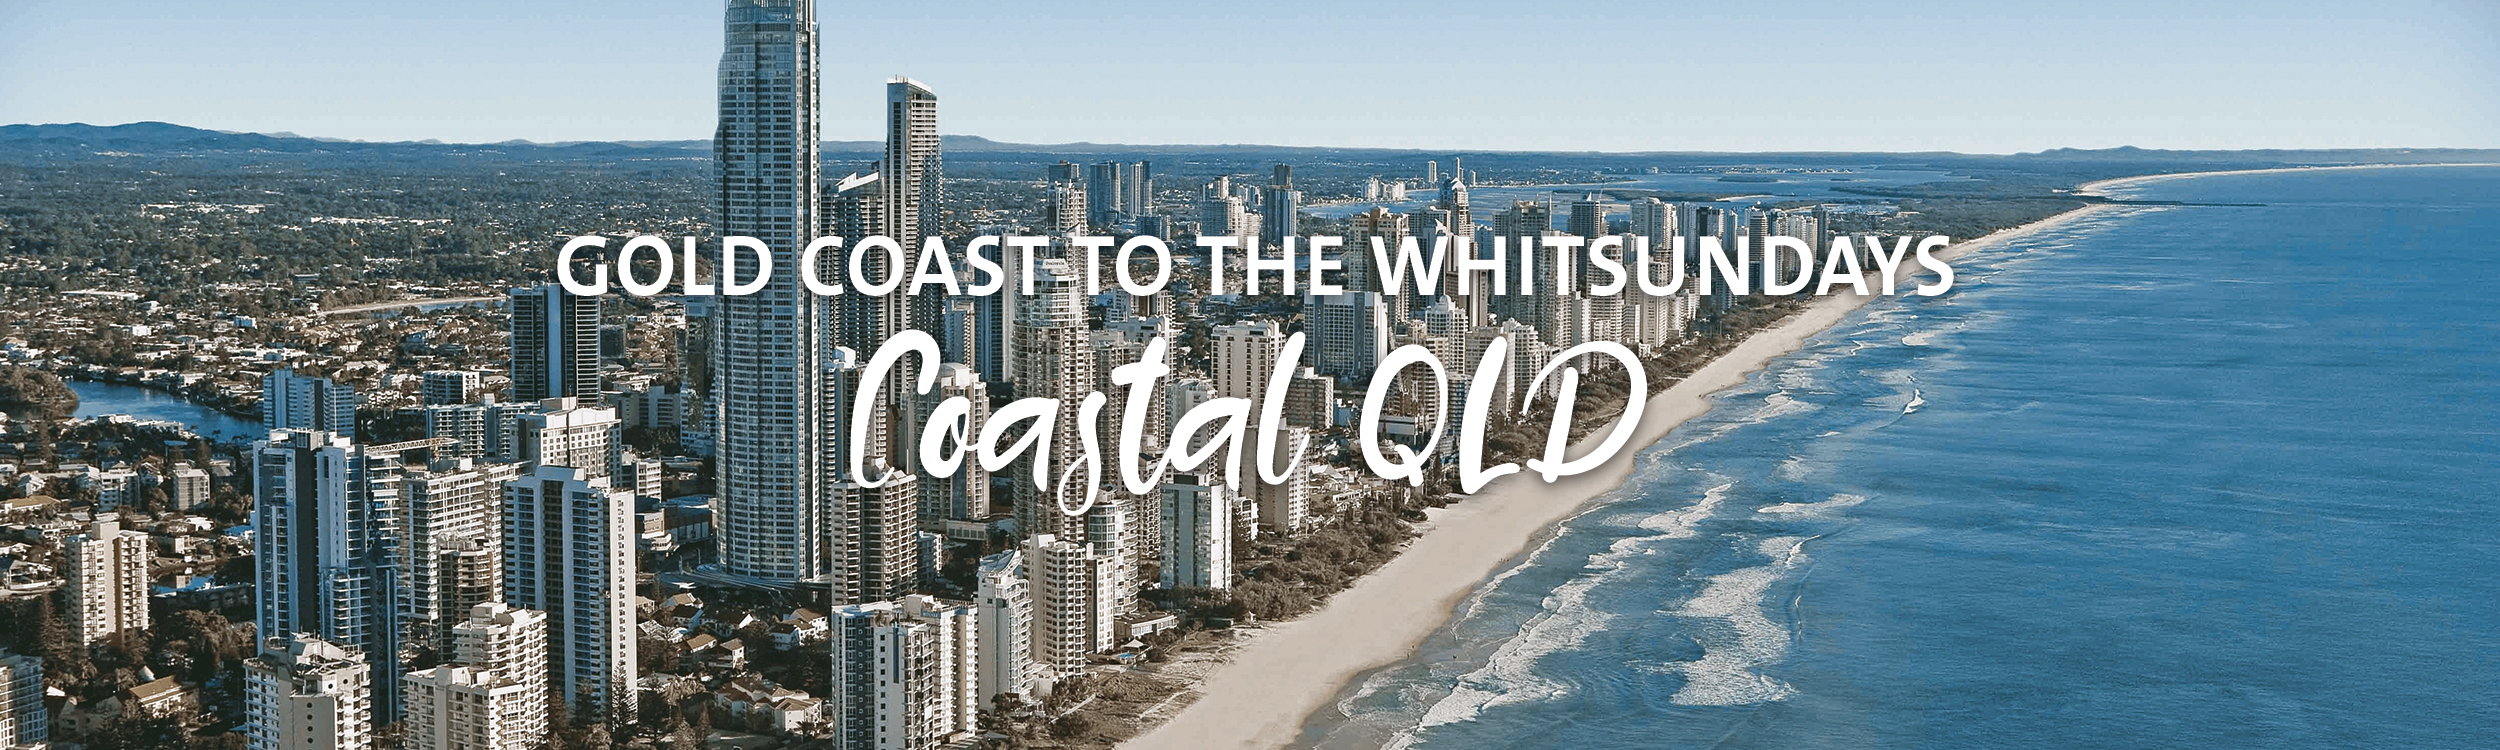 Gold Coast to Whitsundays Roadtrip